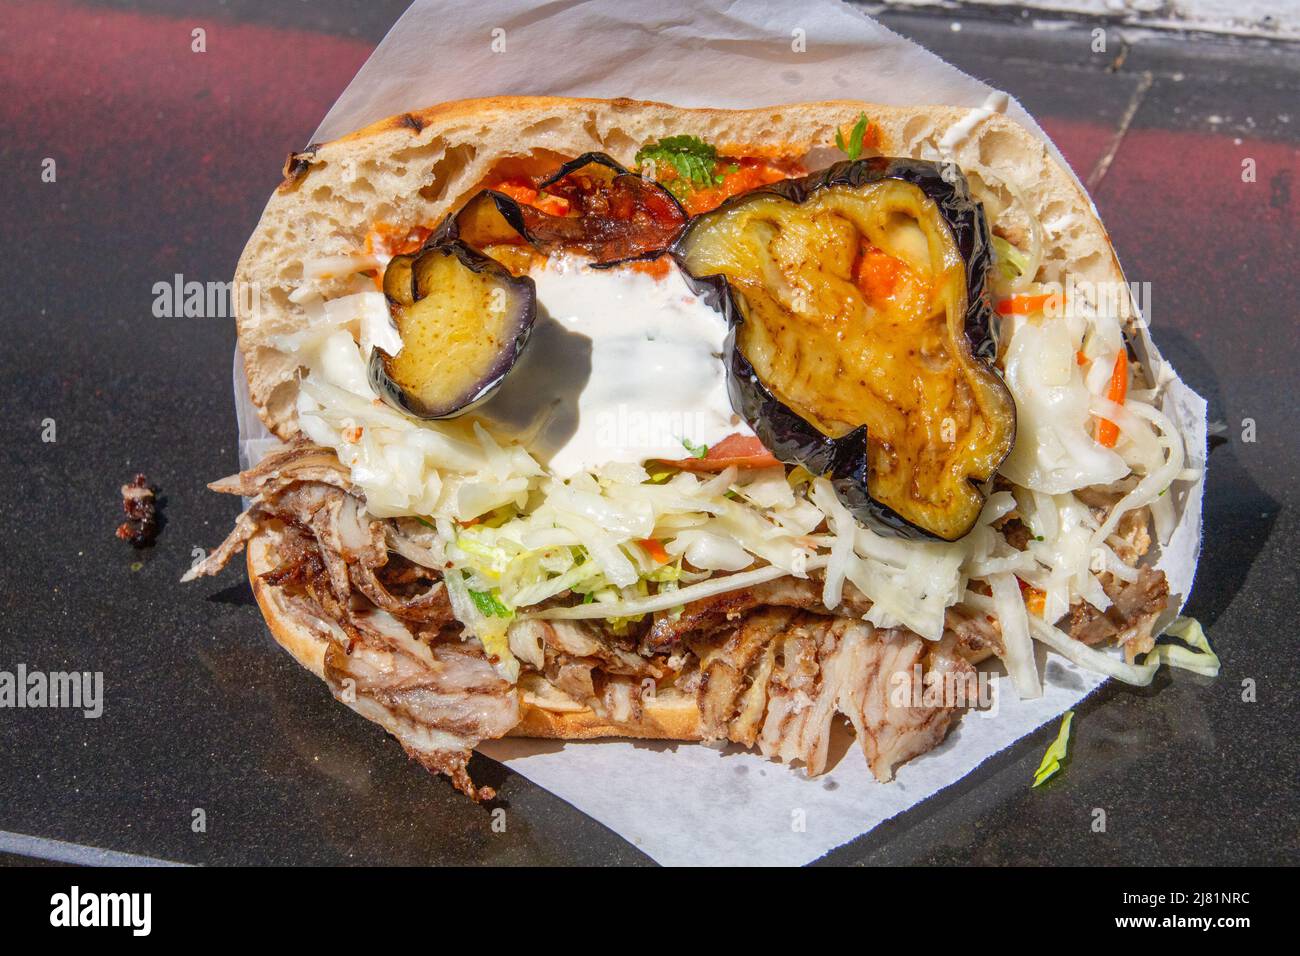 Shawarma berenjena, shawarma con berenjena, Foto de stock